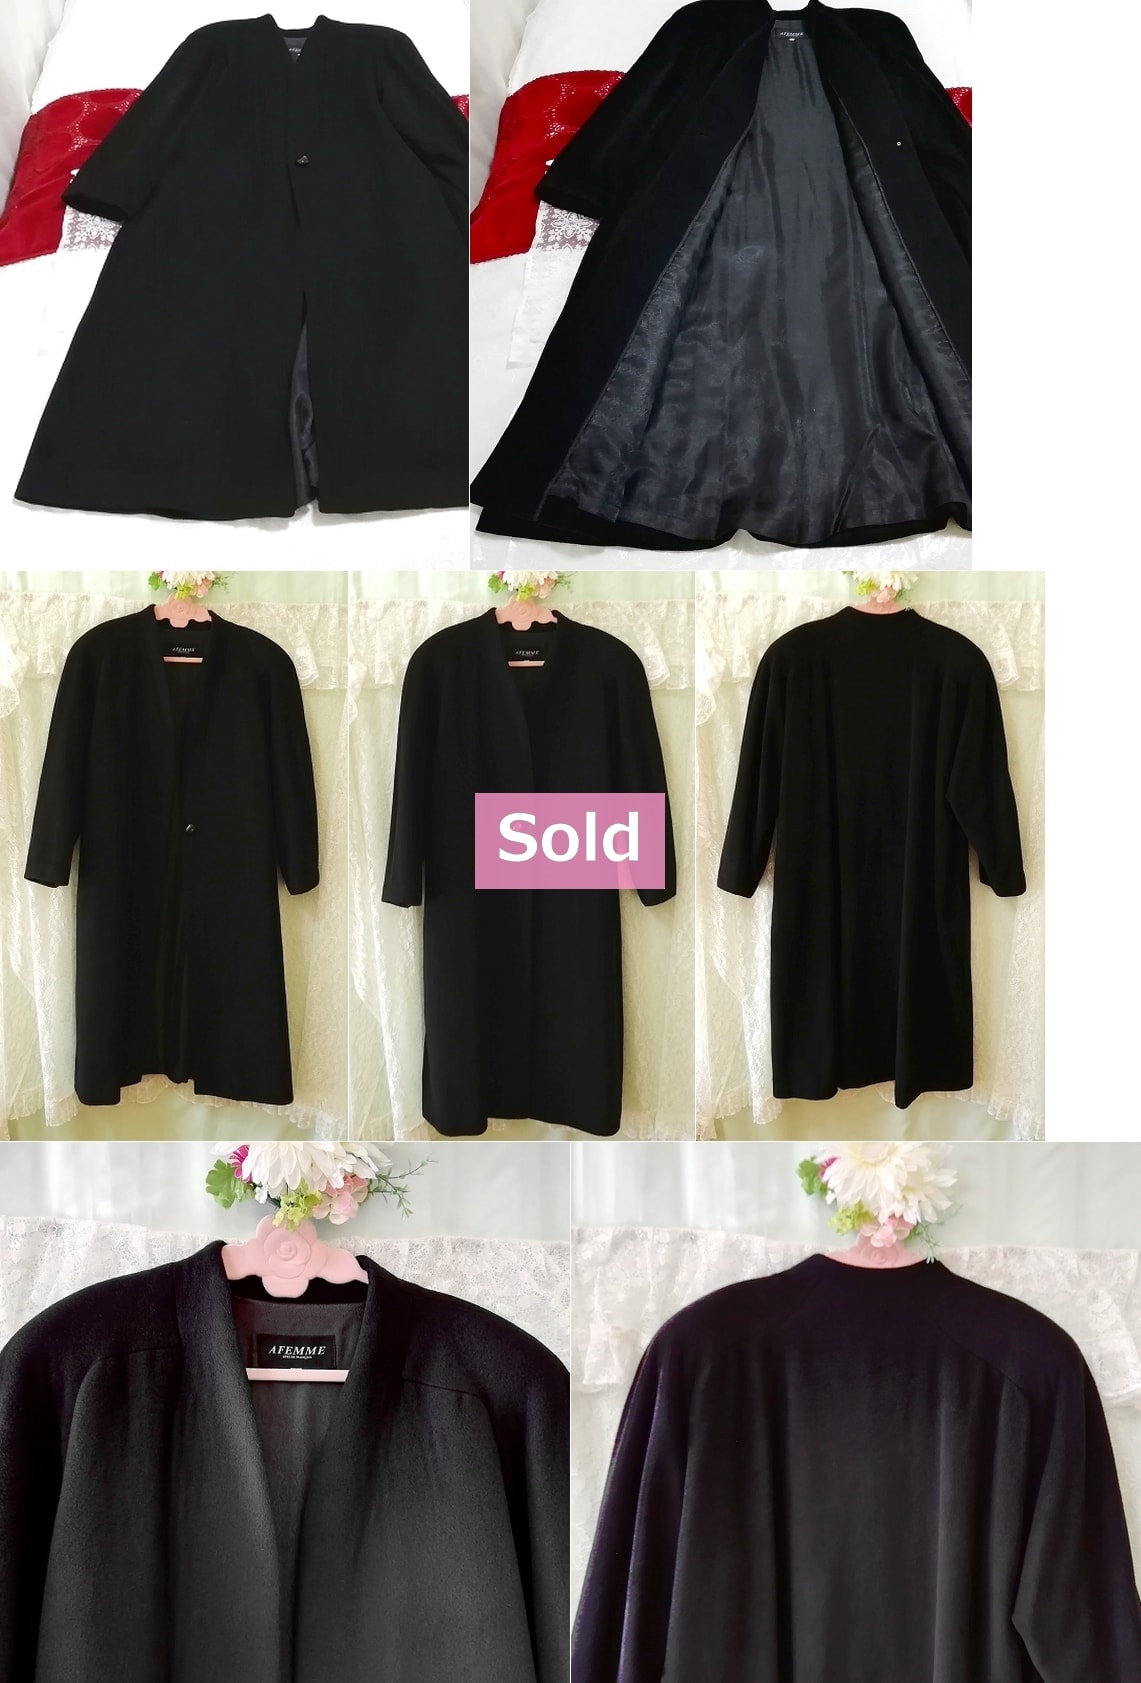 AFEMME Atelier Franais 100% schwarzer Maxi-Long-Cardigan-Mantel Kaschmir 100% schwarzer Maxi-Long-Cardigan-Mantel